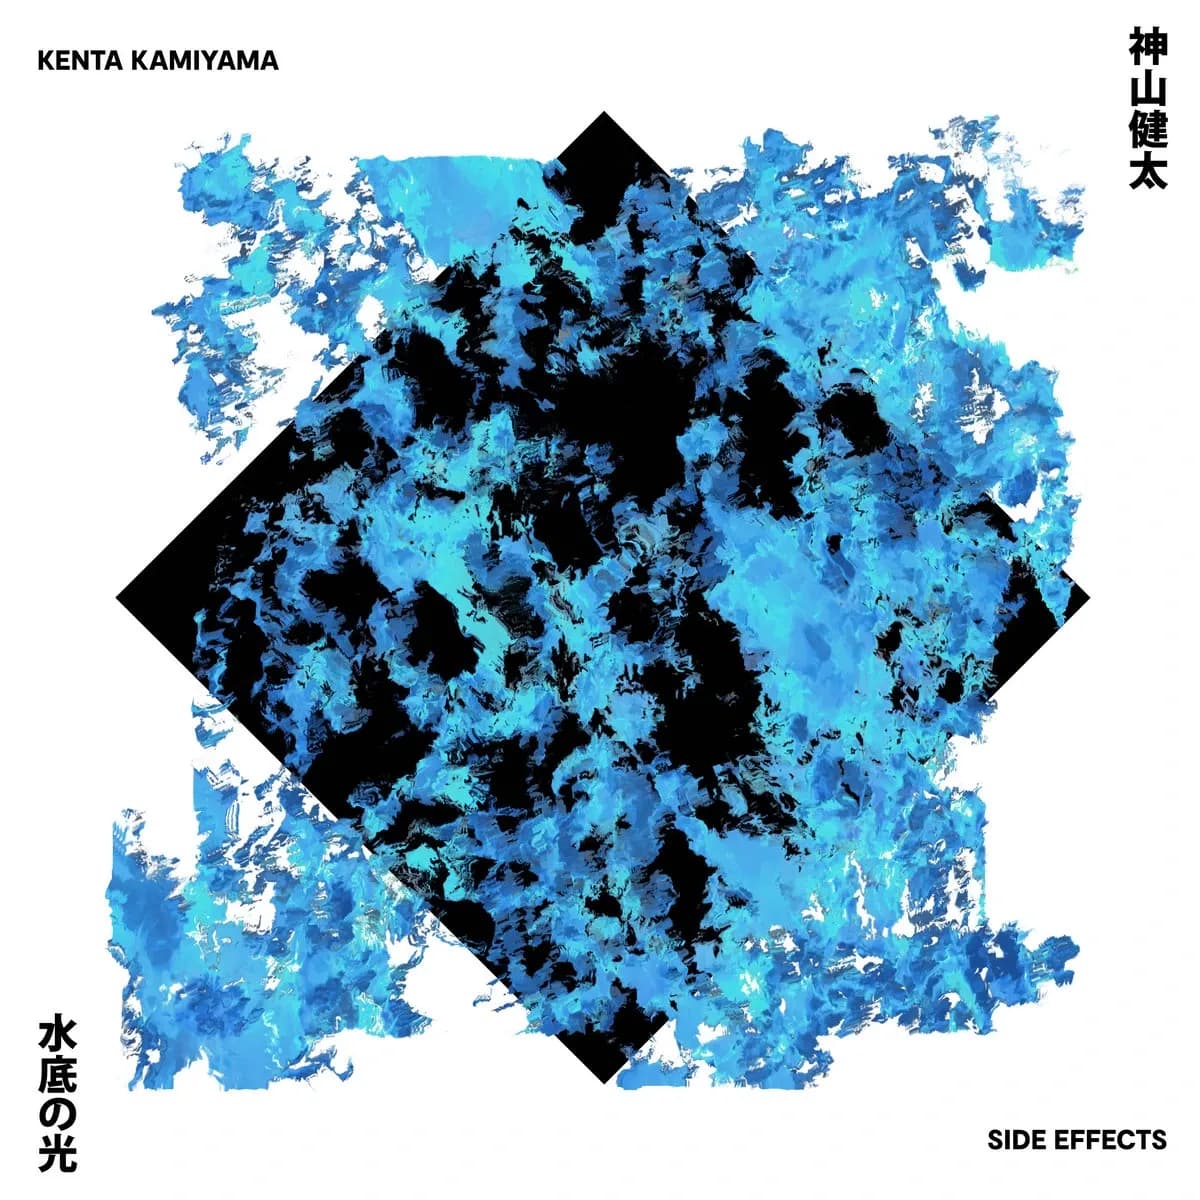 SR016 Kenta Kamiyama's Signs of Rain cover art